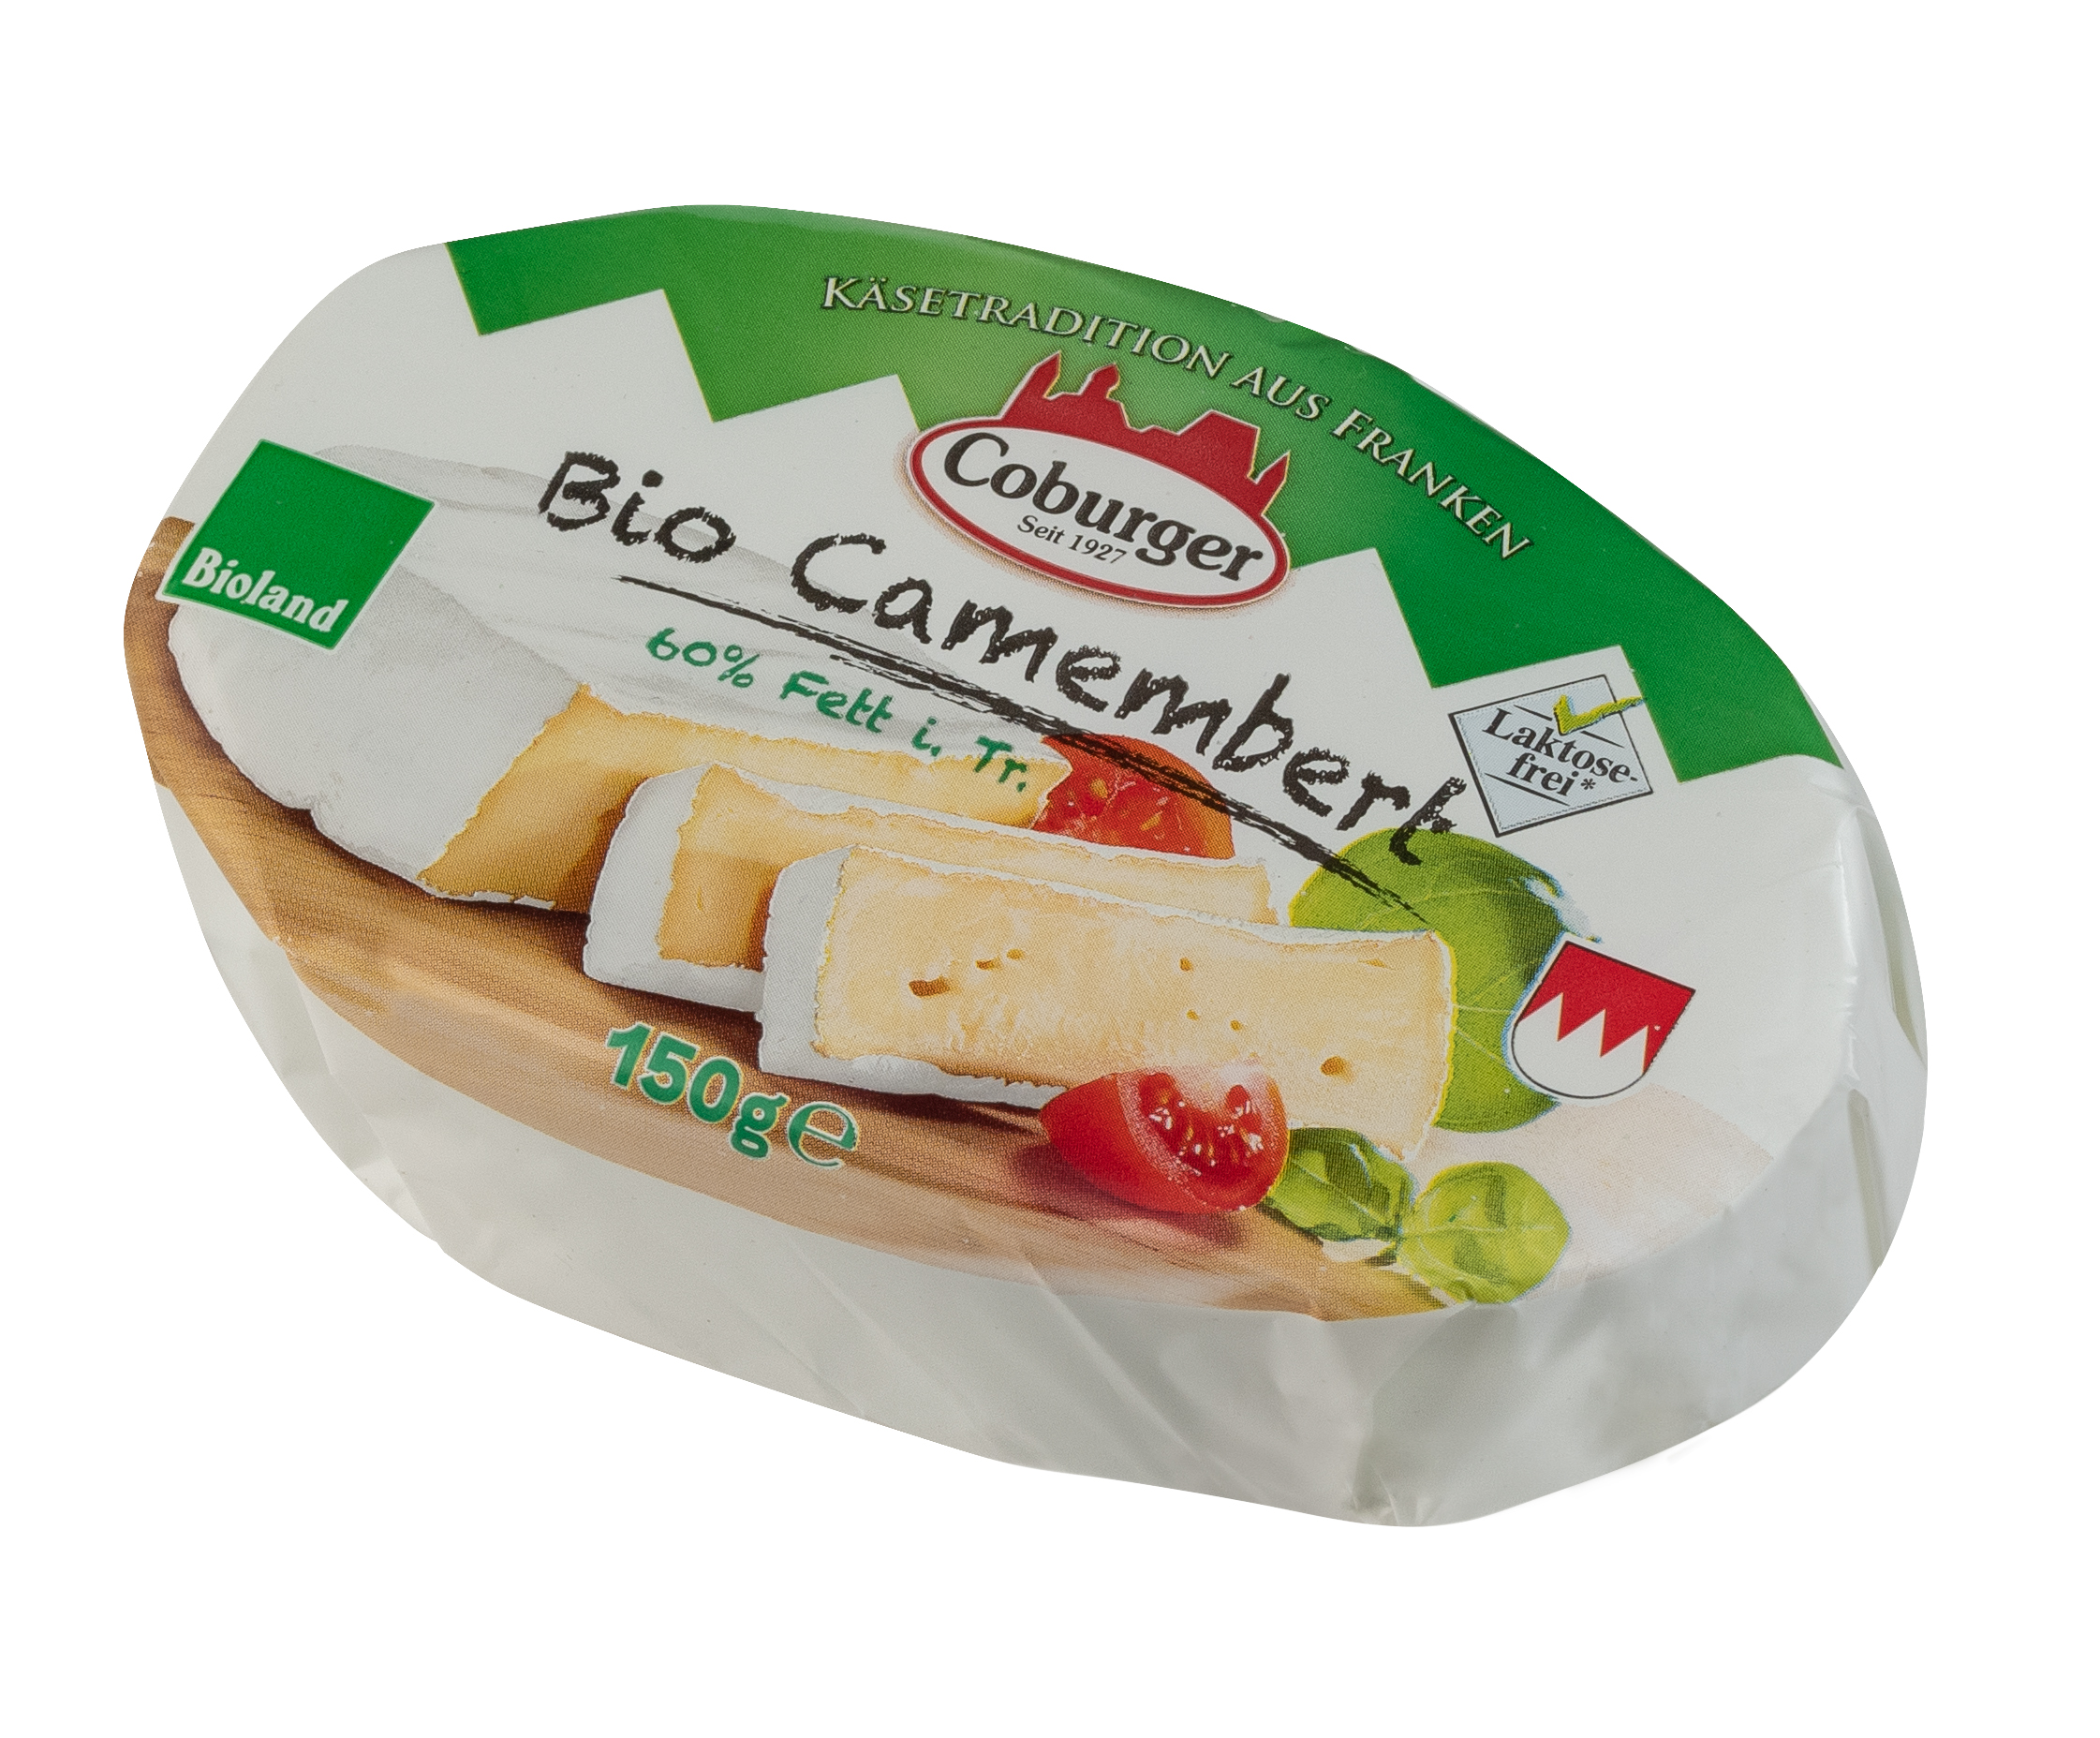 Coburger Bioland Camembert oval, 150g - Milchwerke Oberfranken West